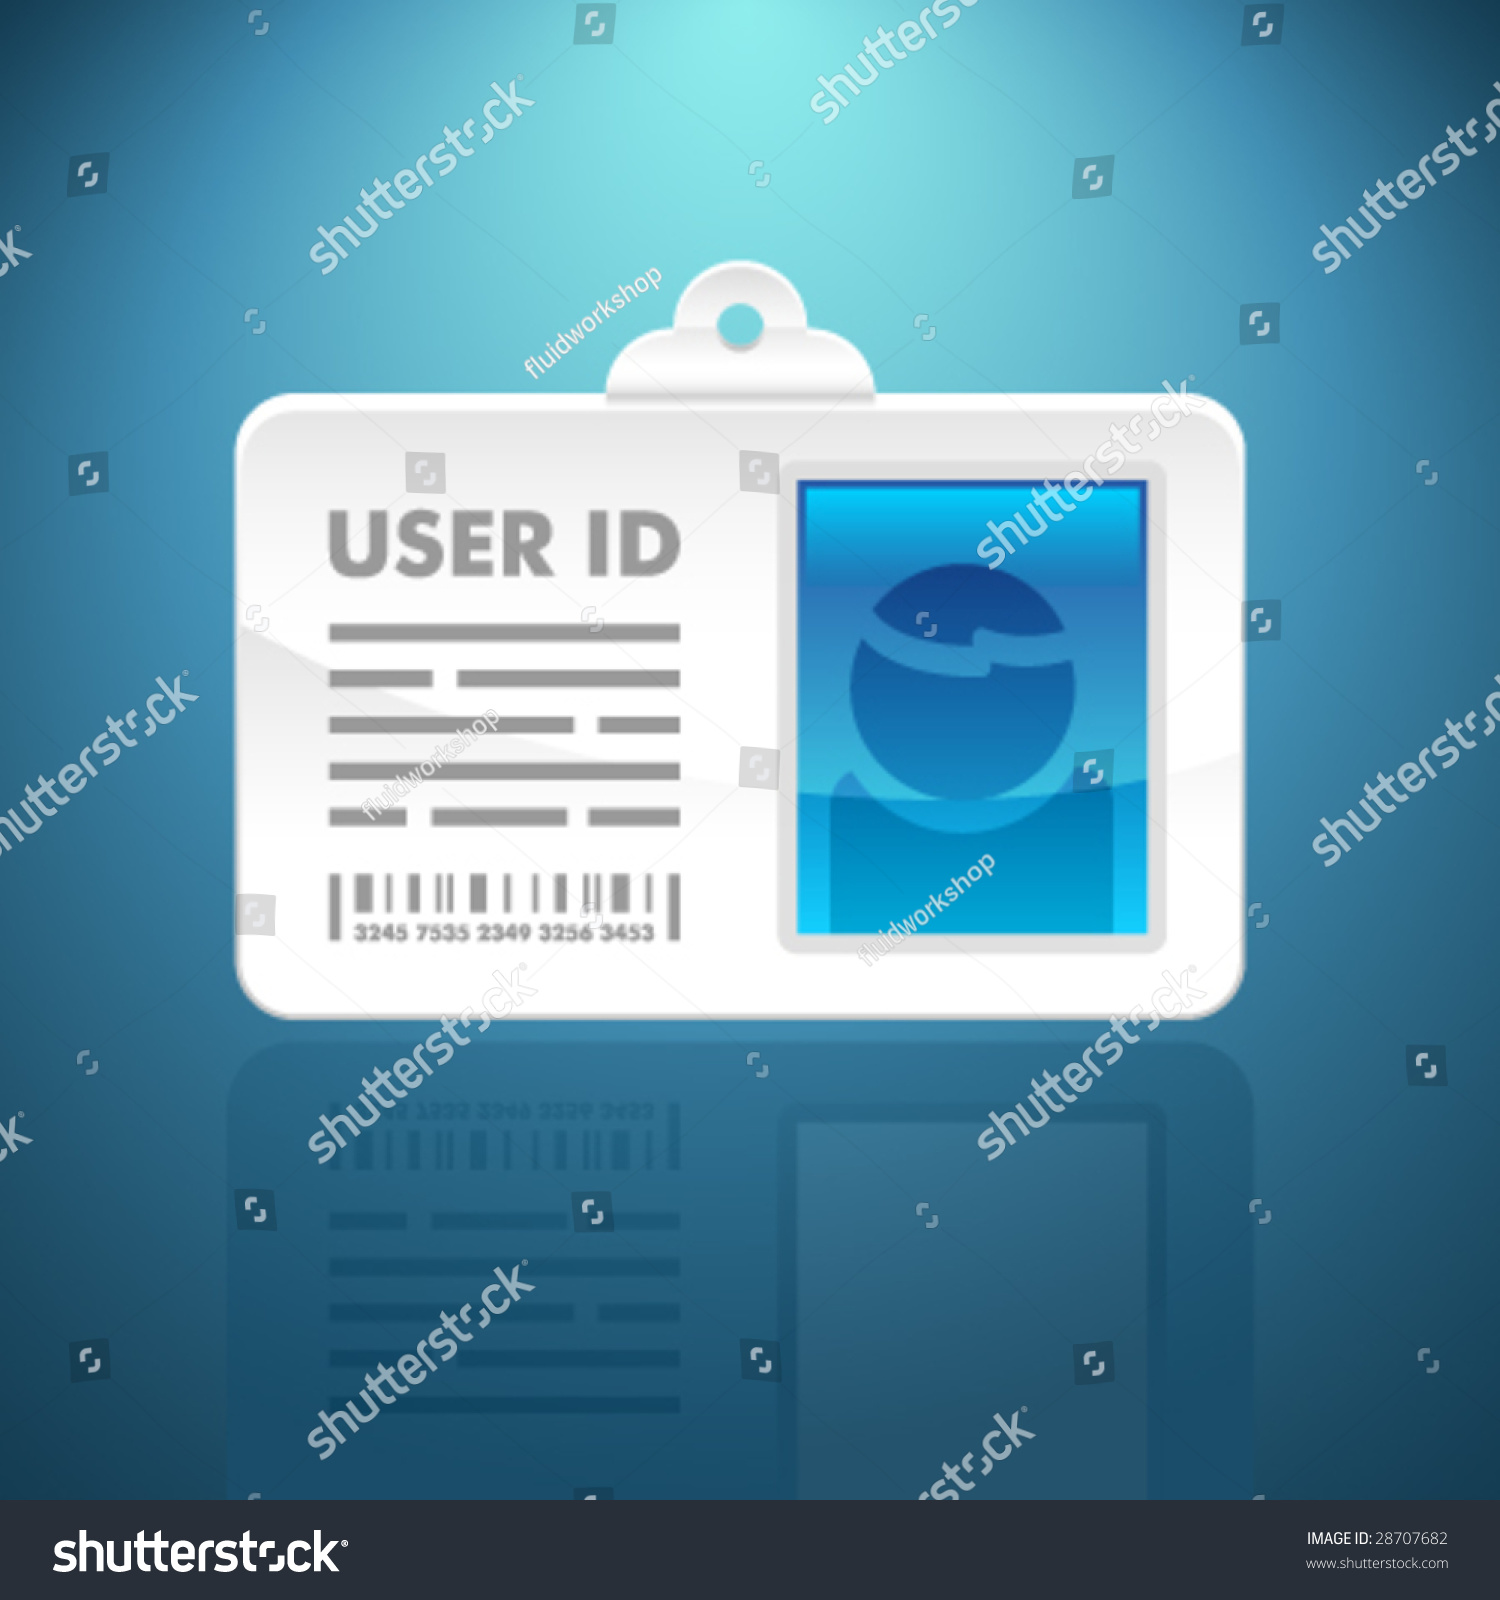 Vector Id Card - 28707682 : Shutterstock